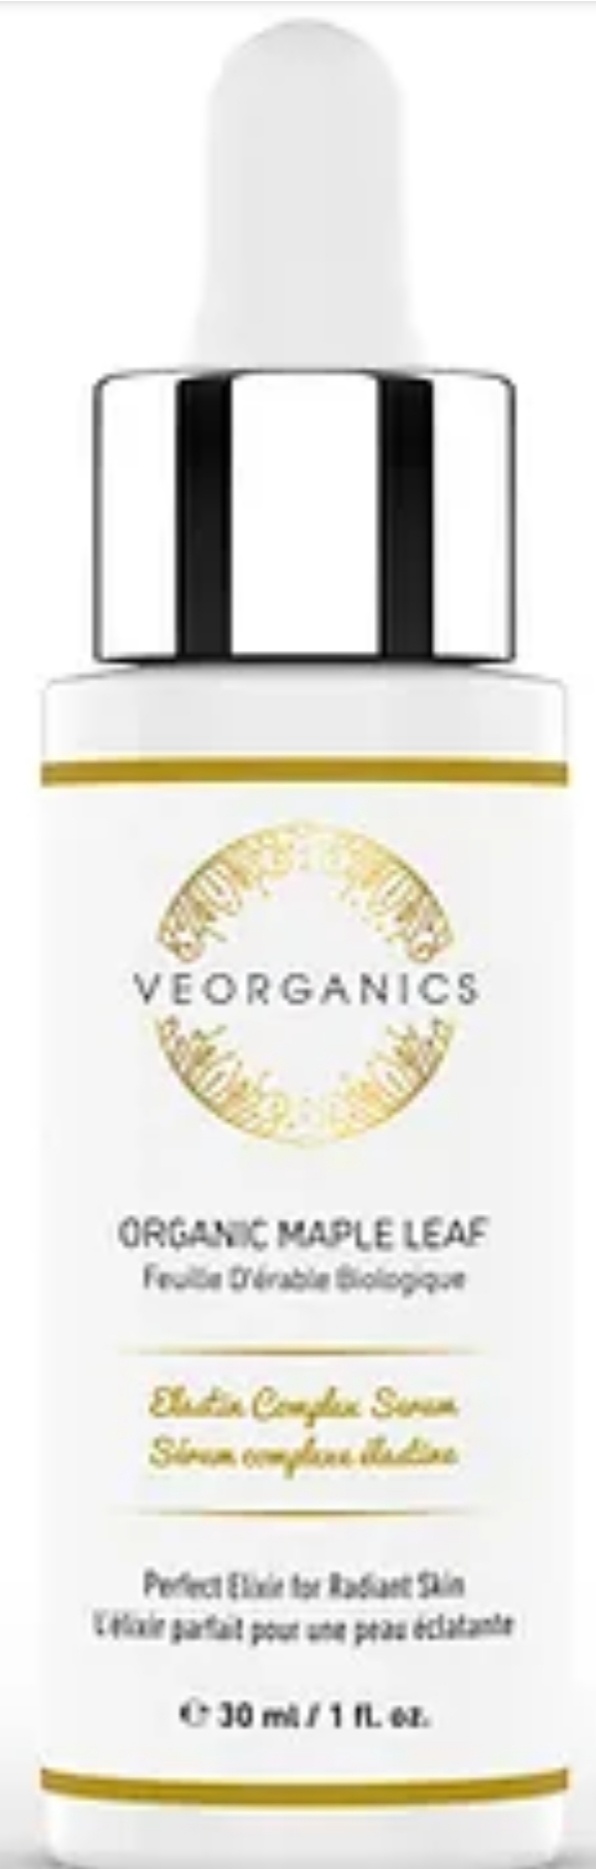 Veorganics Organic Maple Leaf Elastin Complex Serum